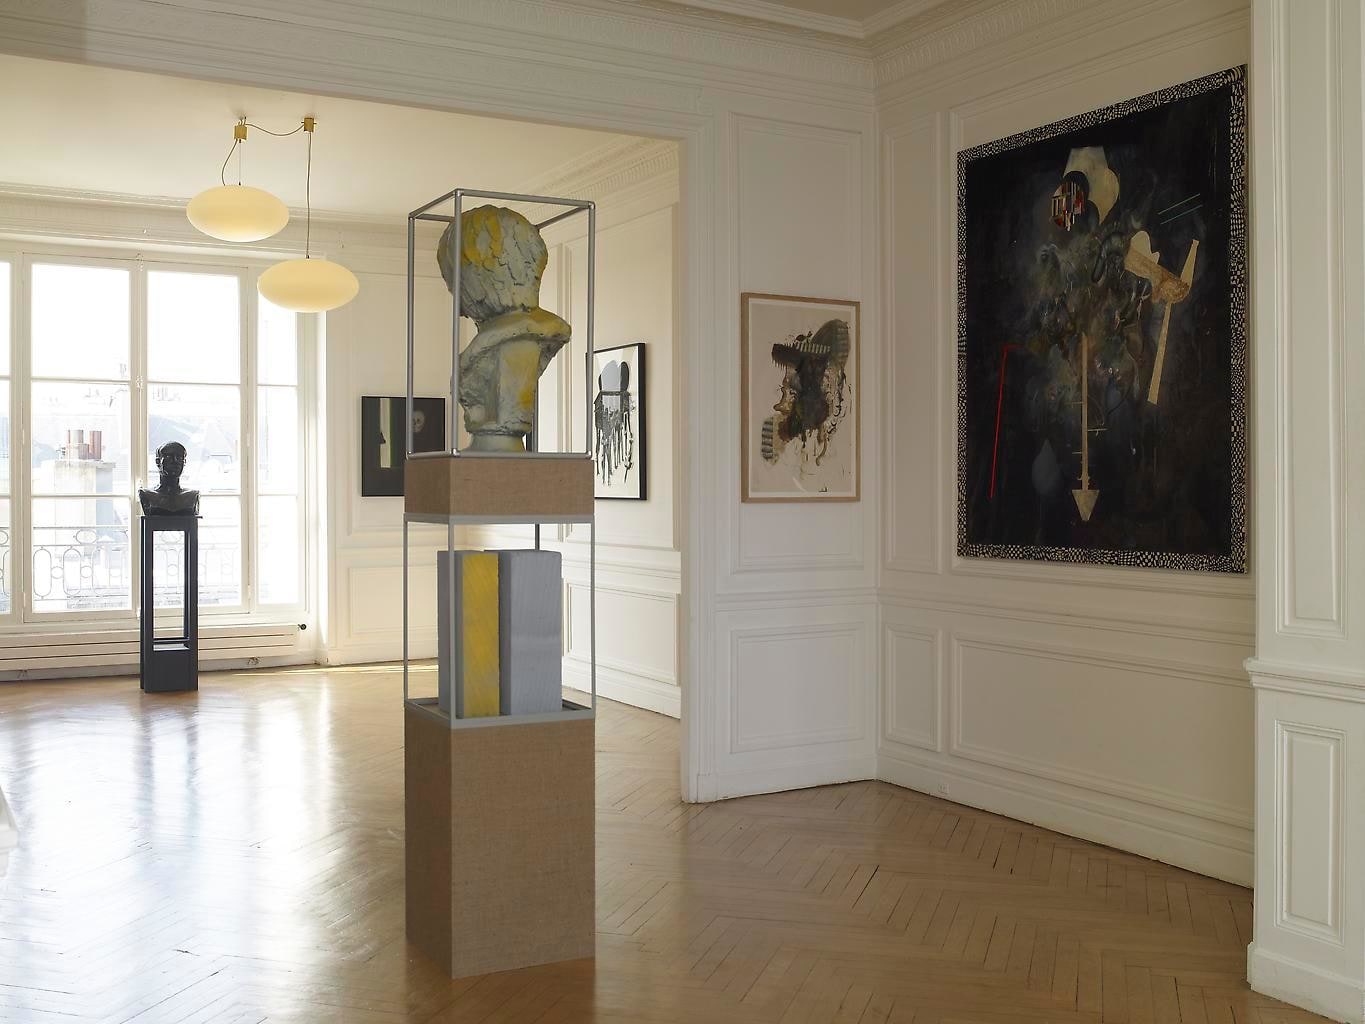  Installation view, Rive Gauche / Rive Droite, Jean Marcel Camard, Paris, September 9 - September 25, 2010